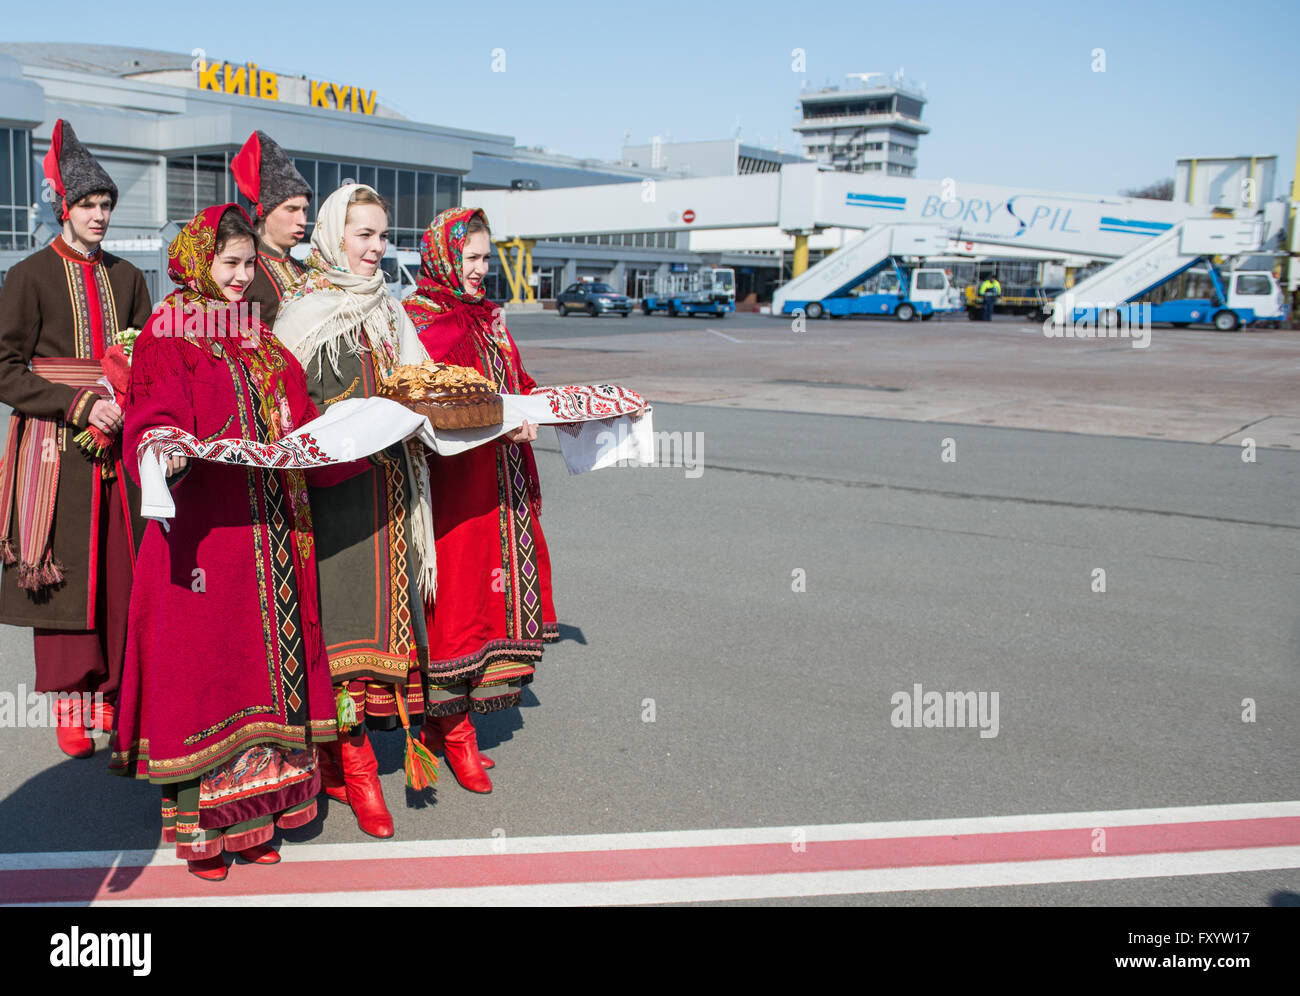 Welcoming ceremony at Boryspil International Airport for Polish president Bronislaw Komorowski during his visit in Kiev, Ukraine Stock Photo